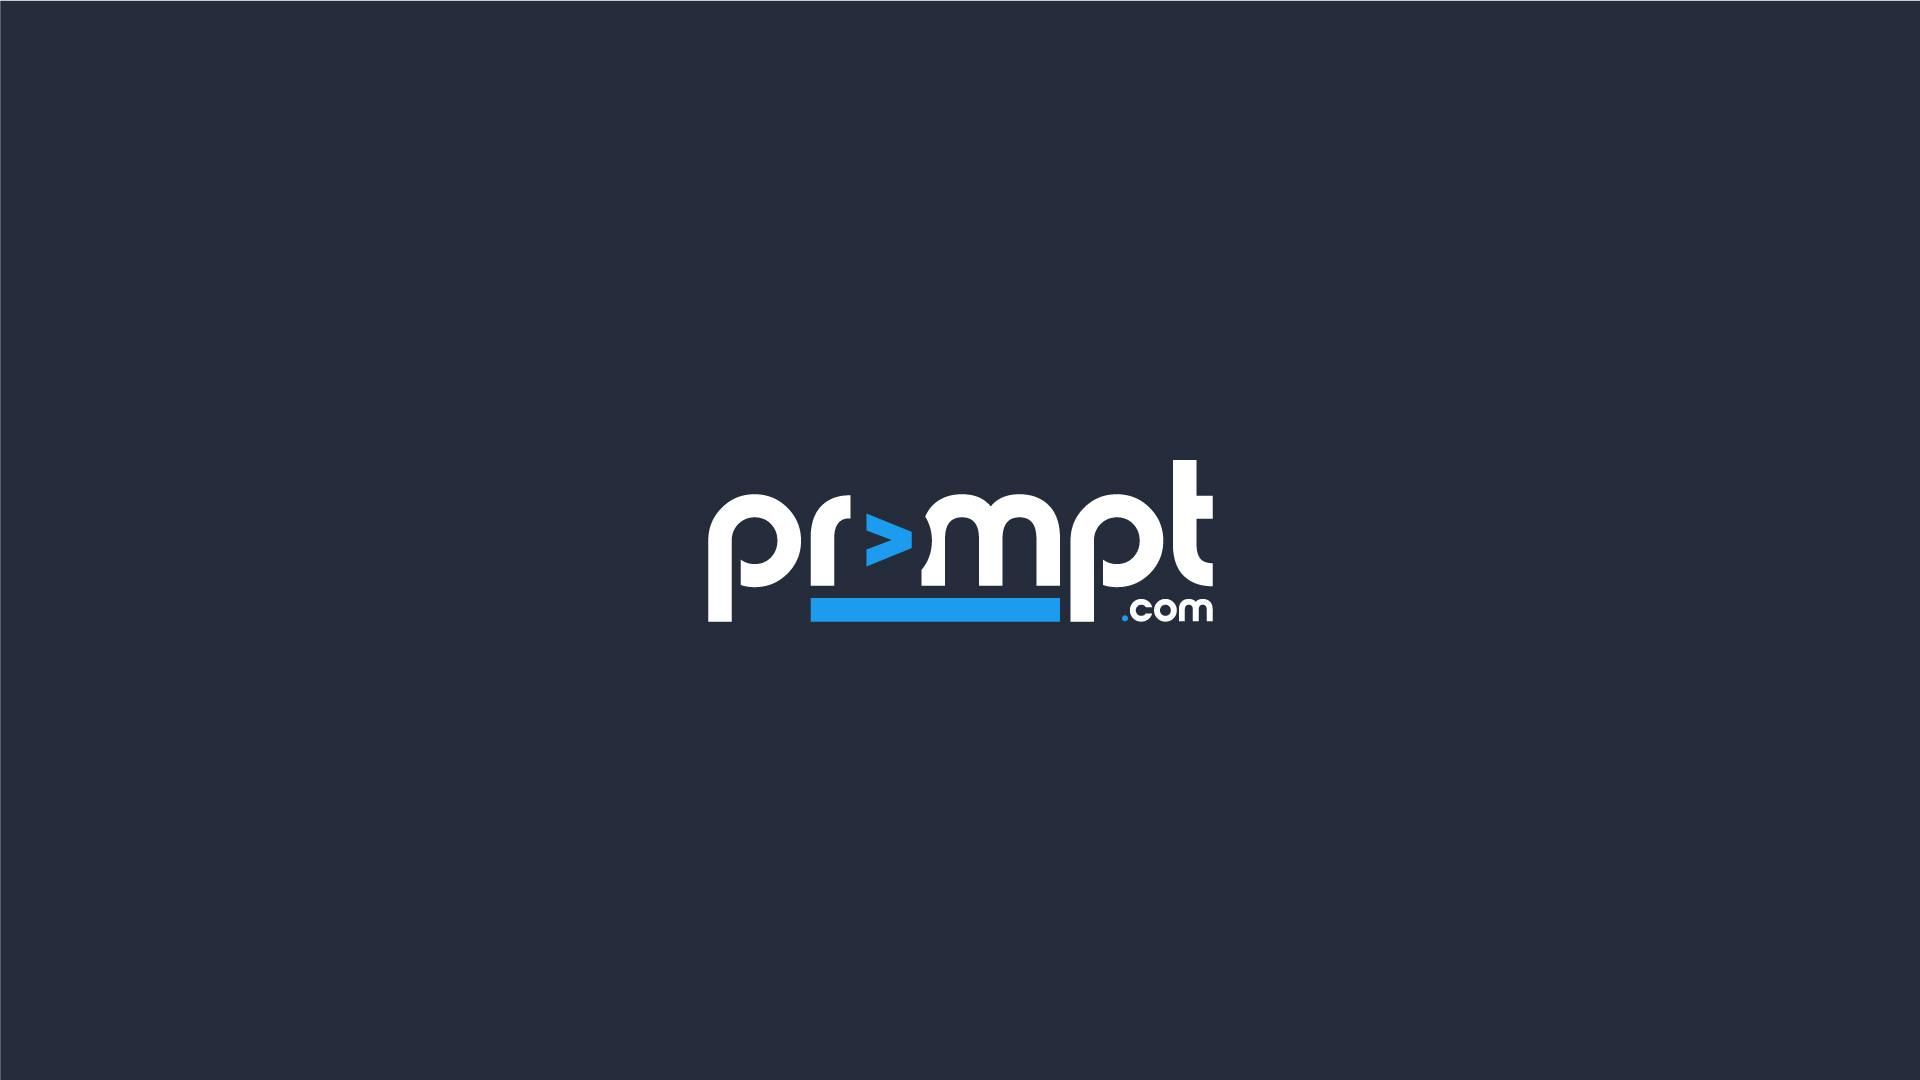 Prompt.com logo on a dark blue background